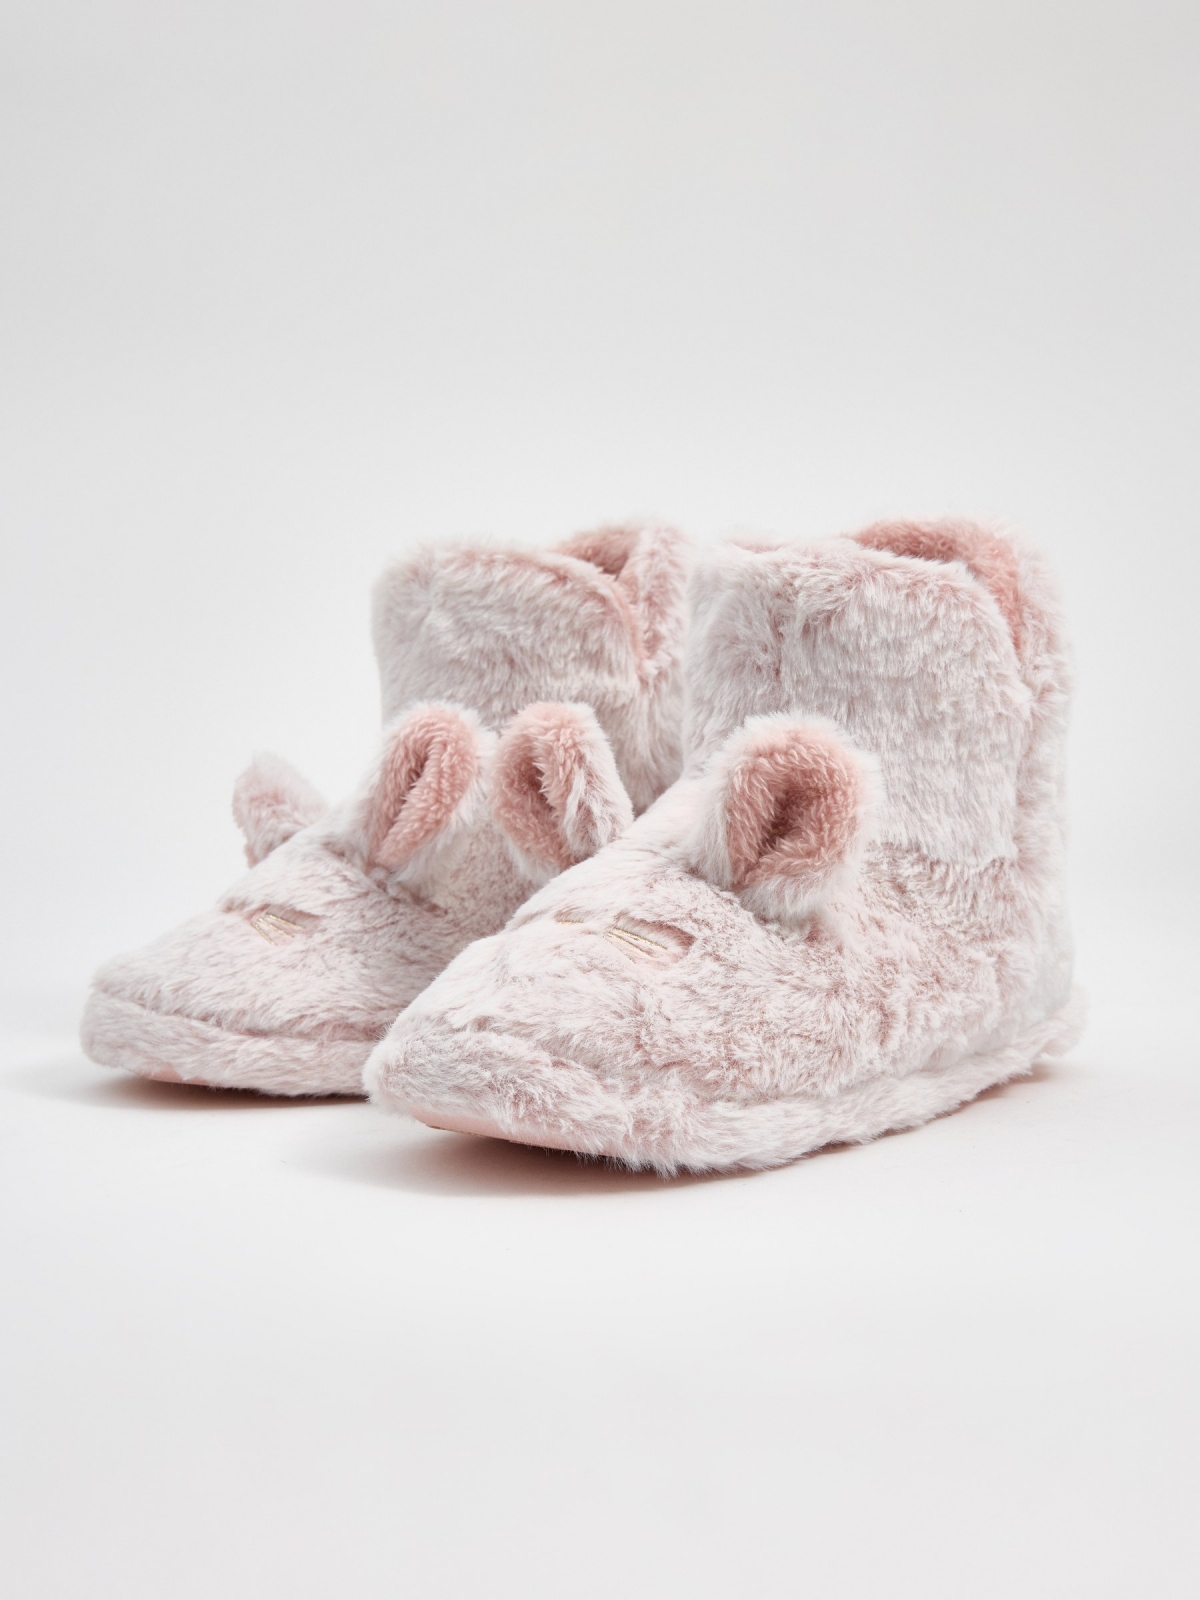 Bunny boots home slippers | Women's Pyjamas | INSIDE